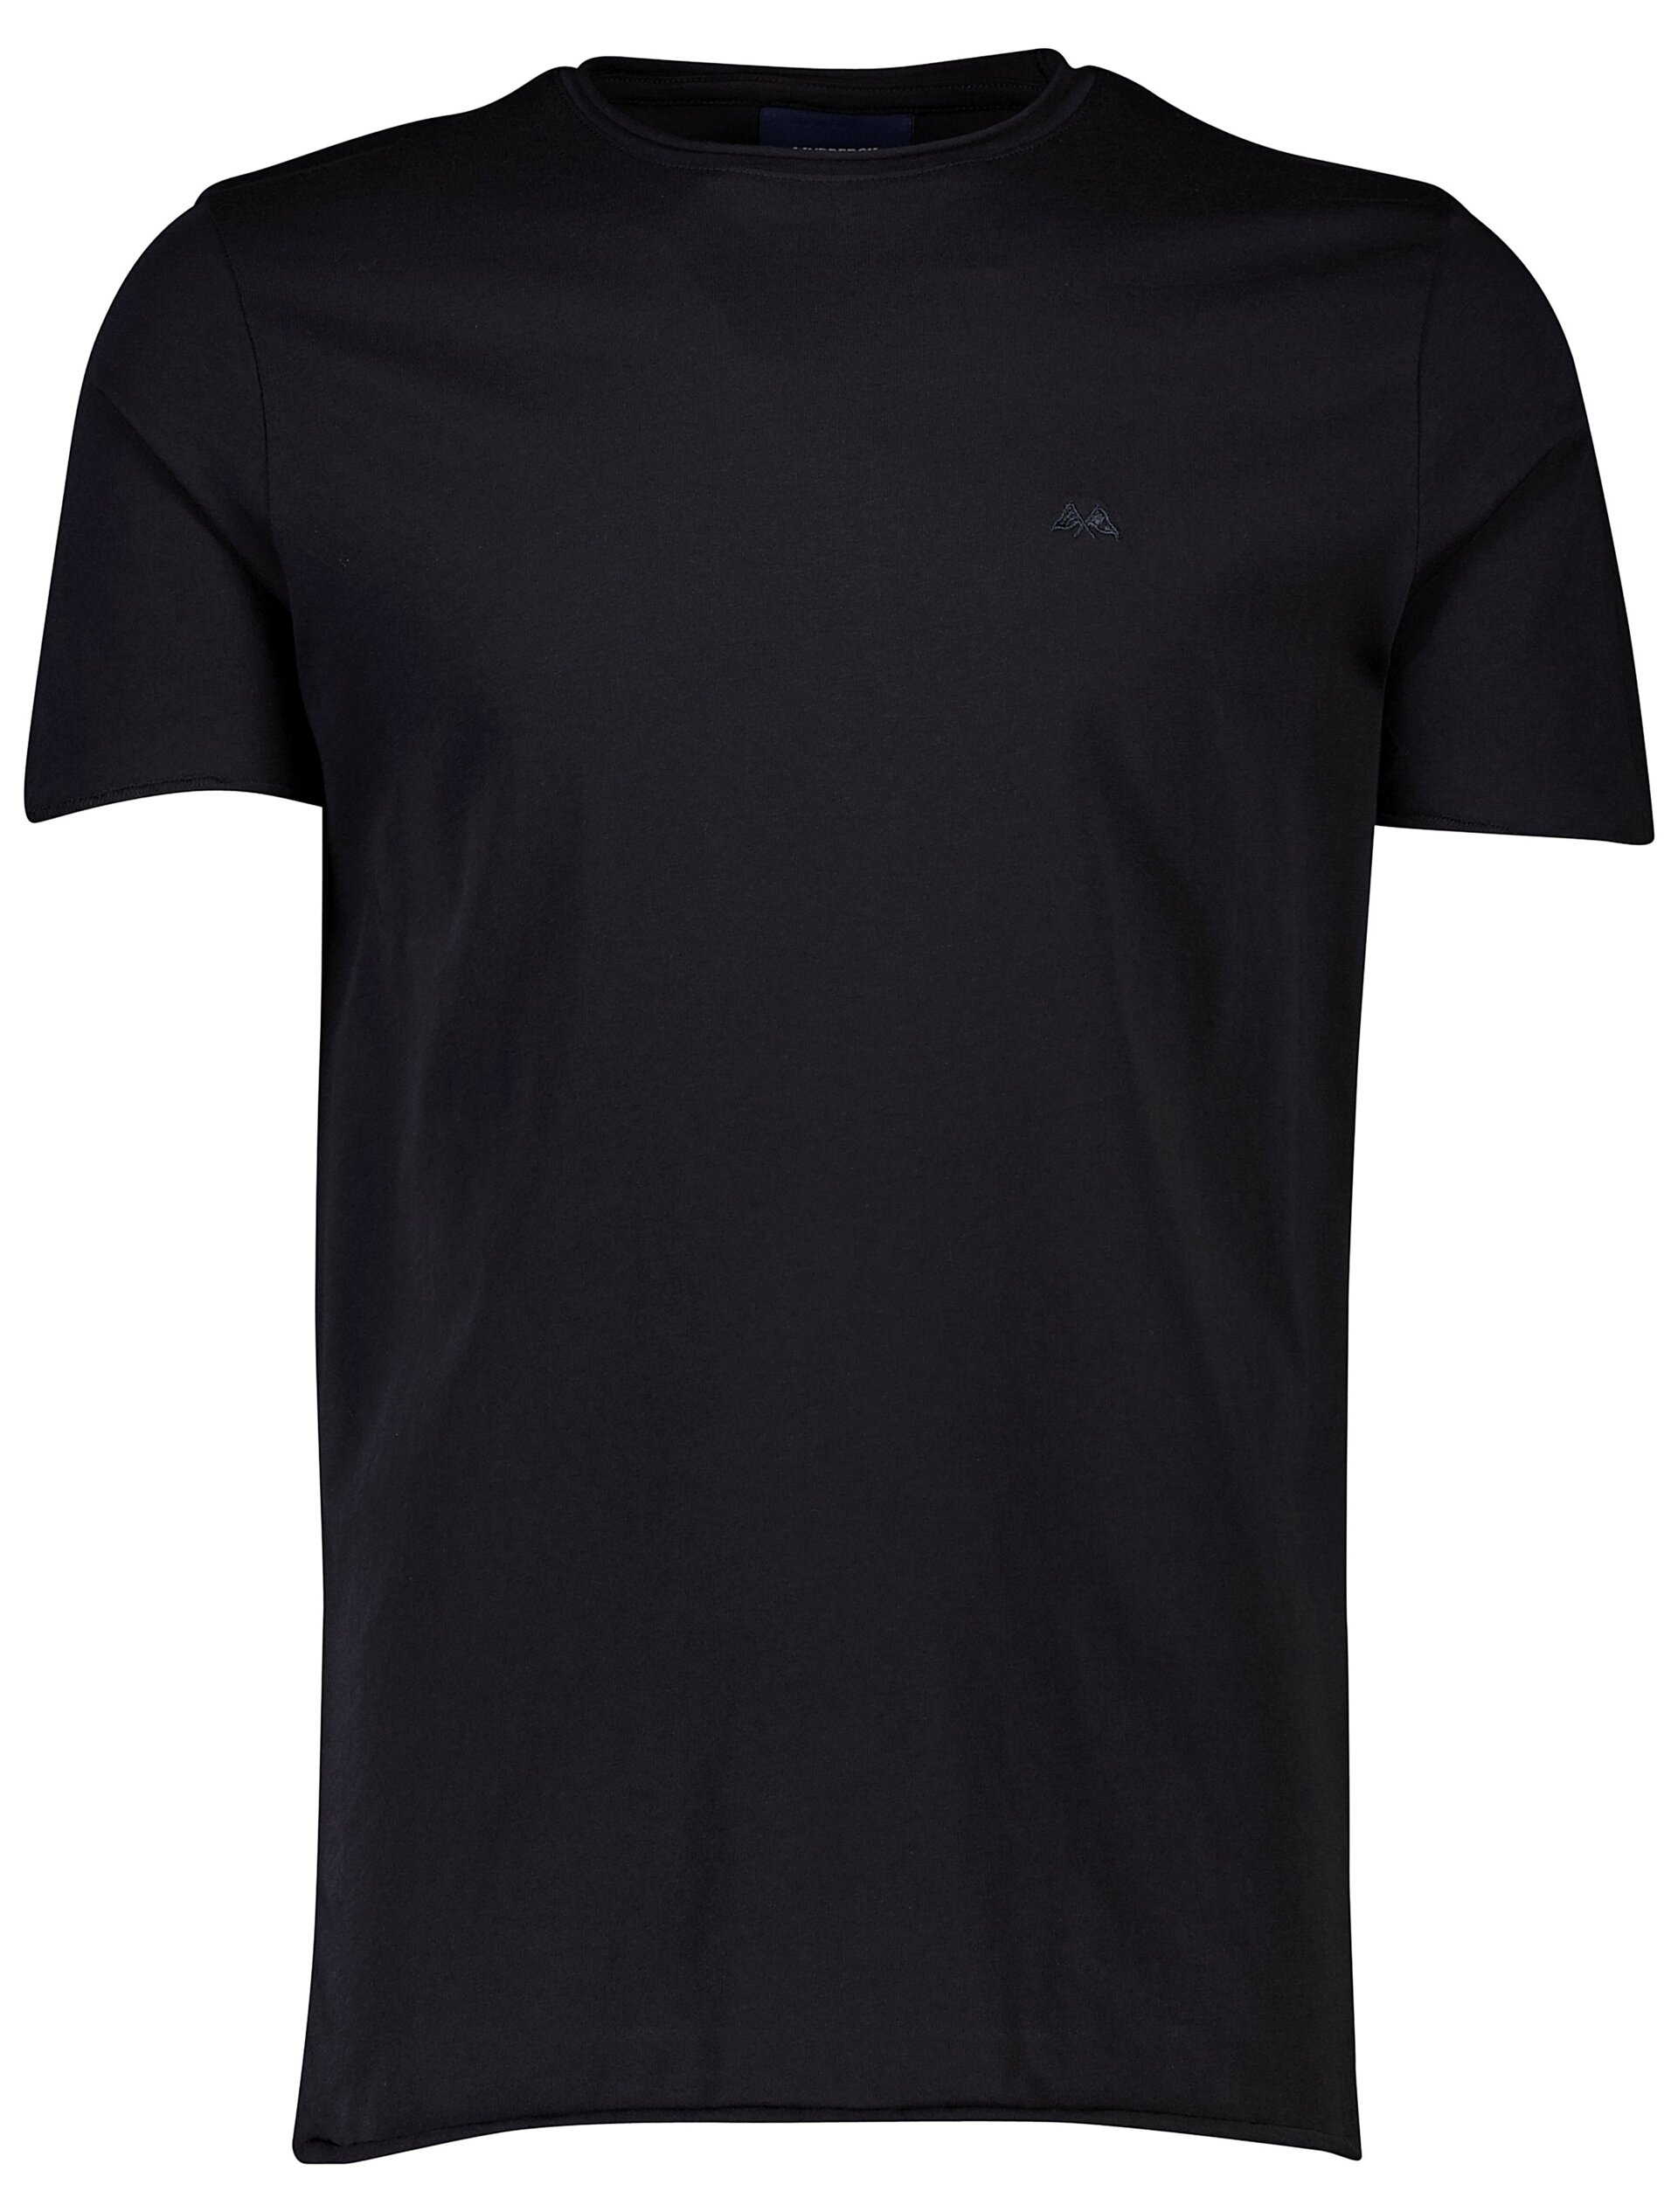 Lindbergh T-shirt schwarz / black